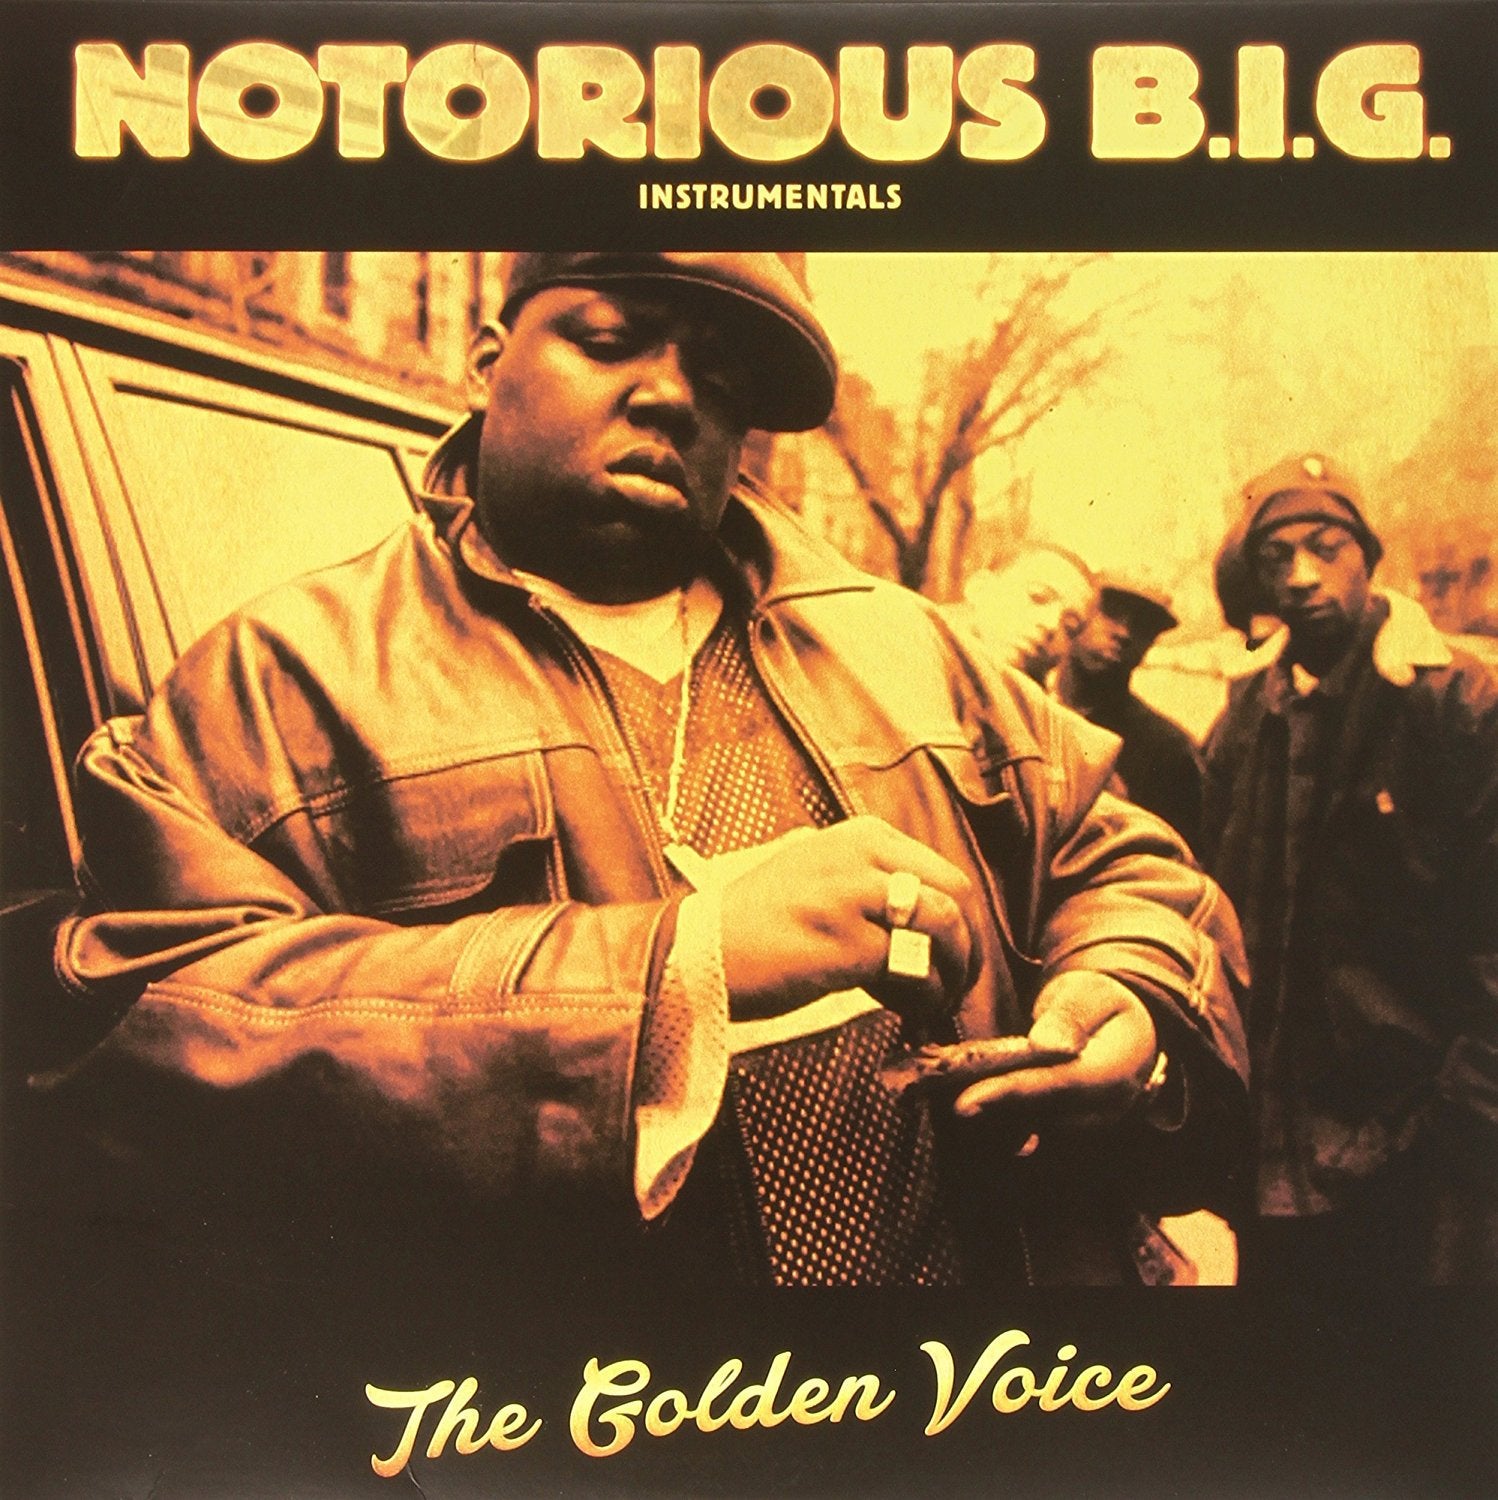 The Notorious B.I.G. Instrumentals the Golden Voice Vinyl